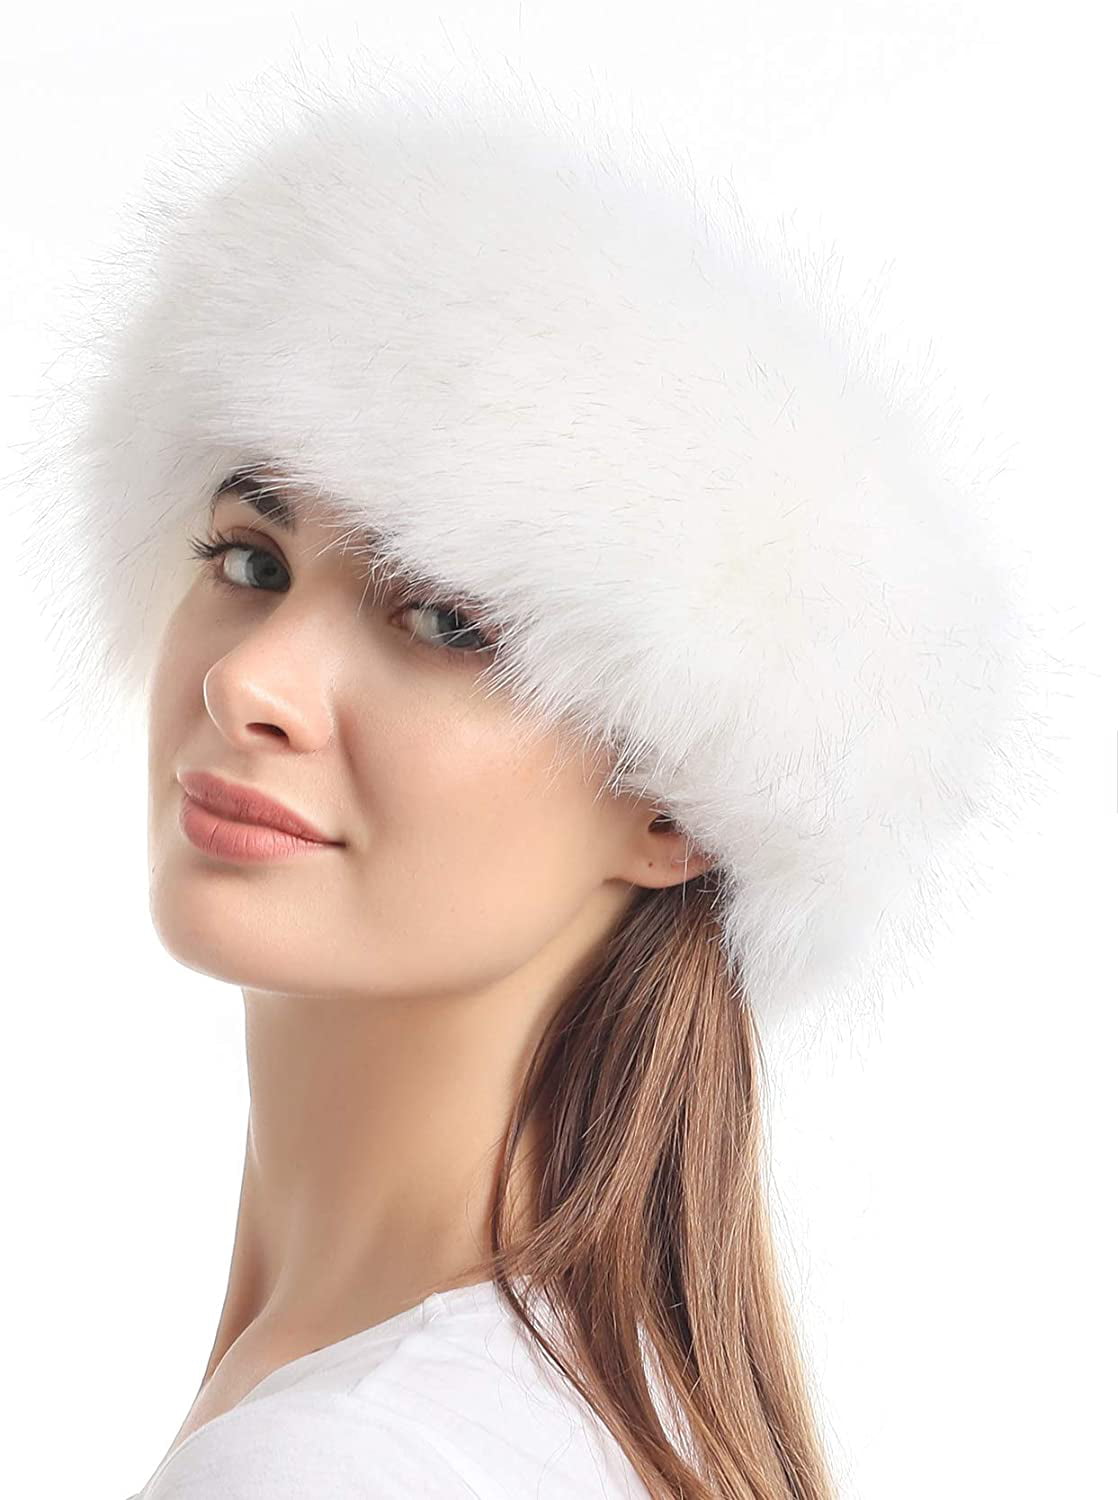 Grey FHQHTH Faux Fur Headband with Elastic for Women Winter Earwarmer Ski Cold Earmuff 